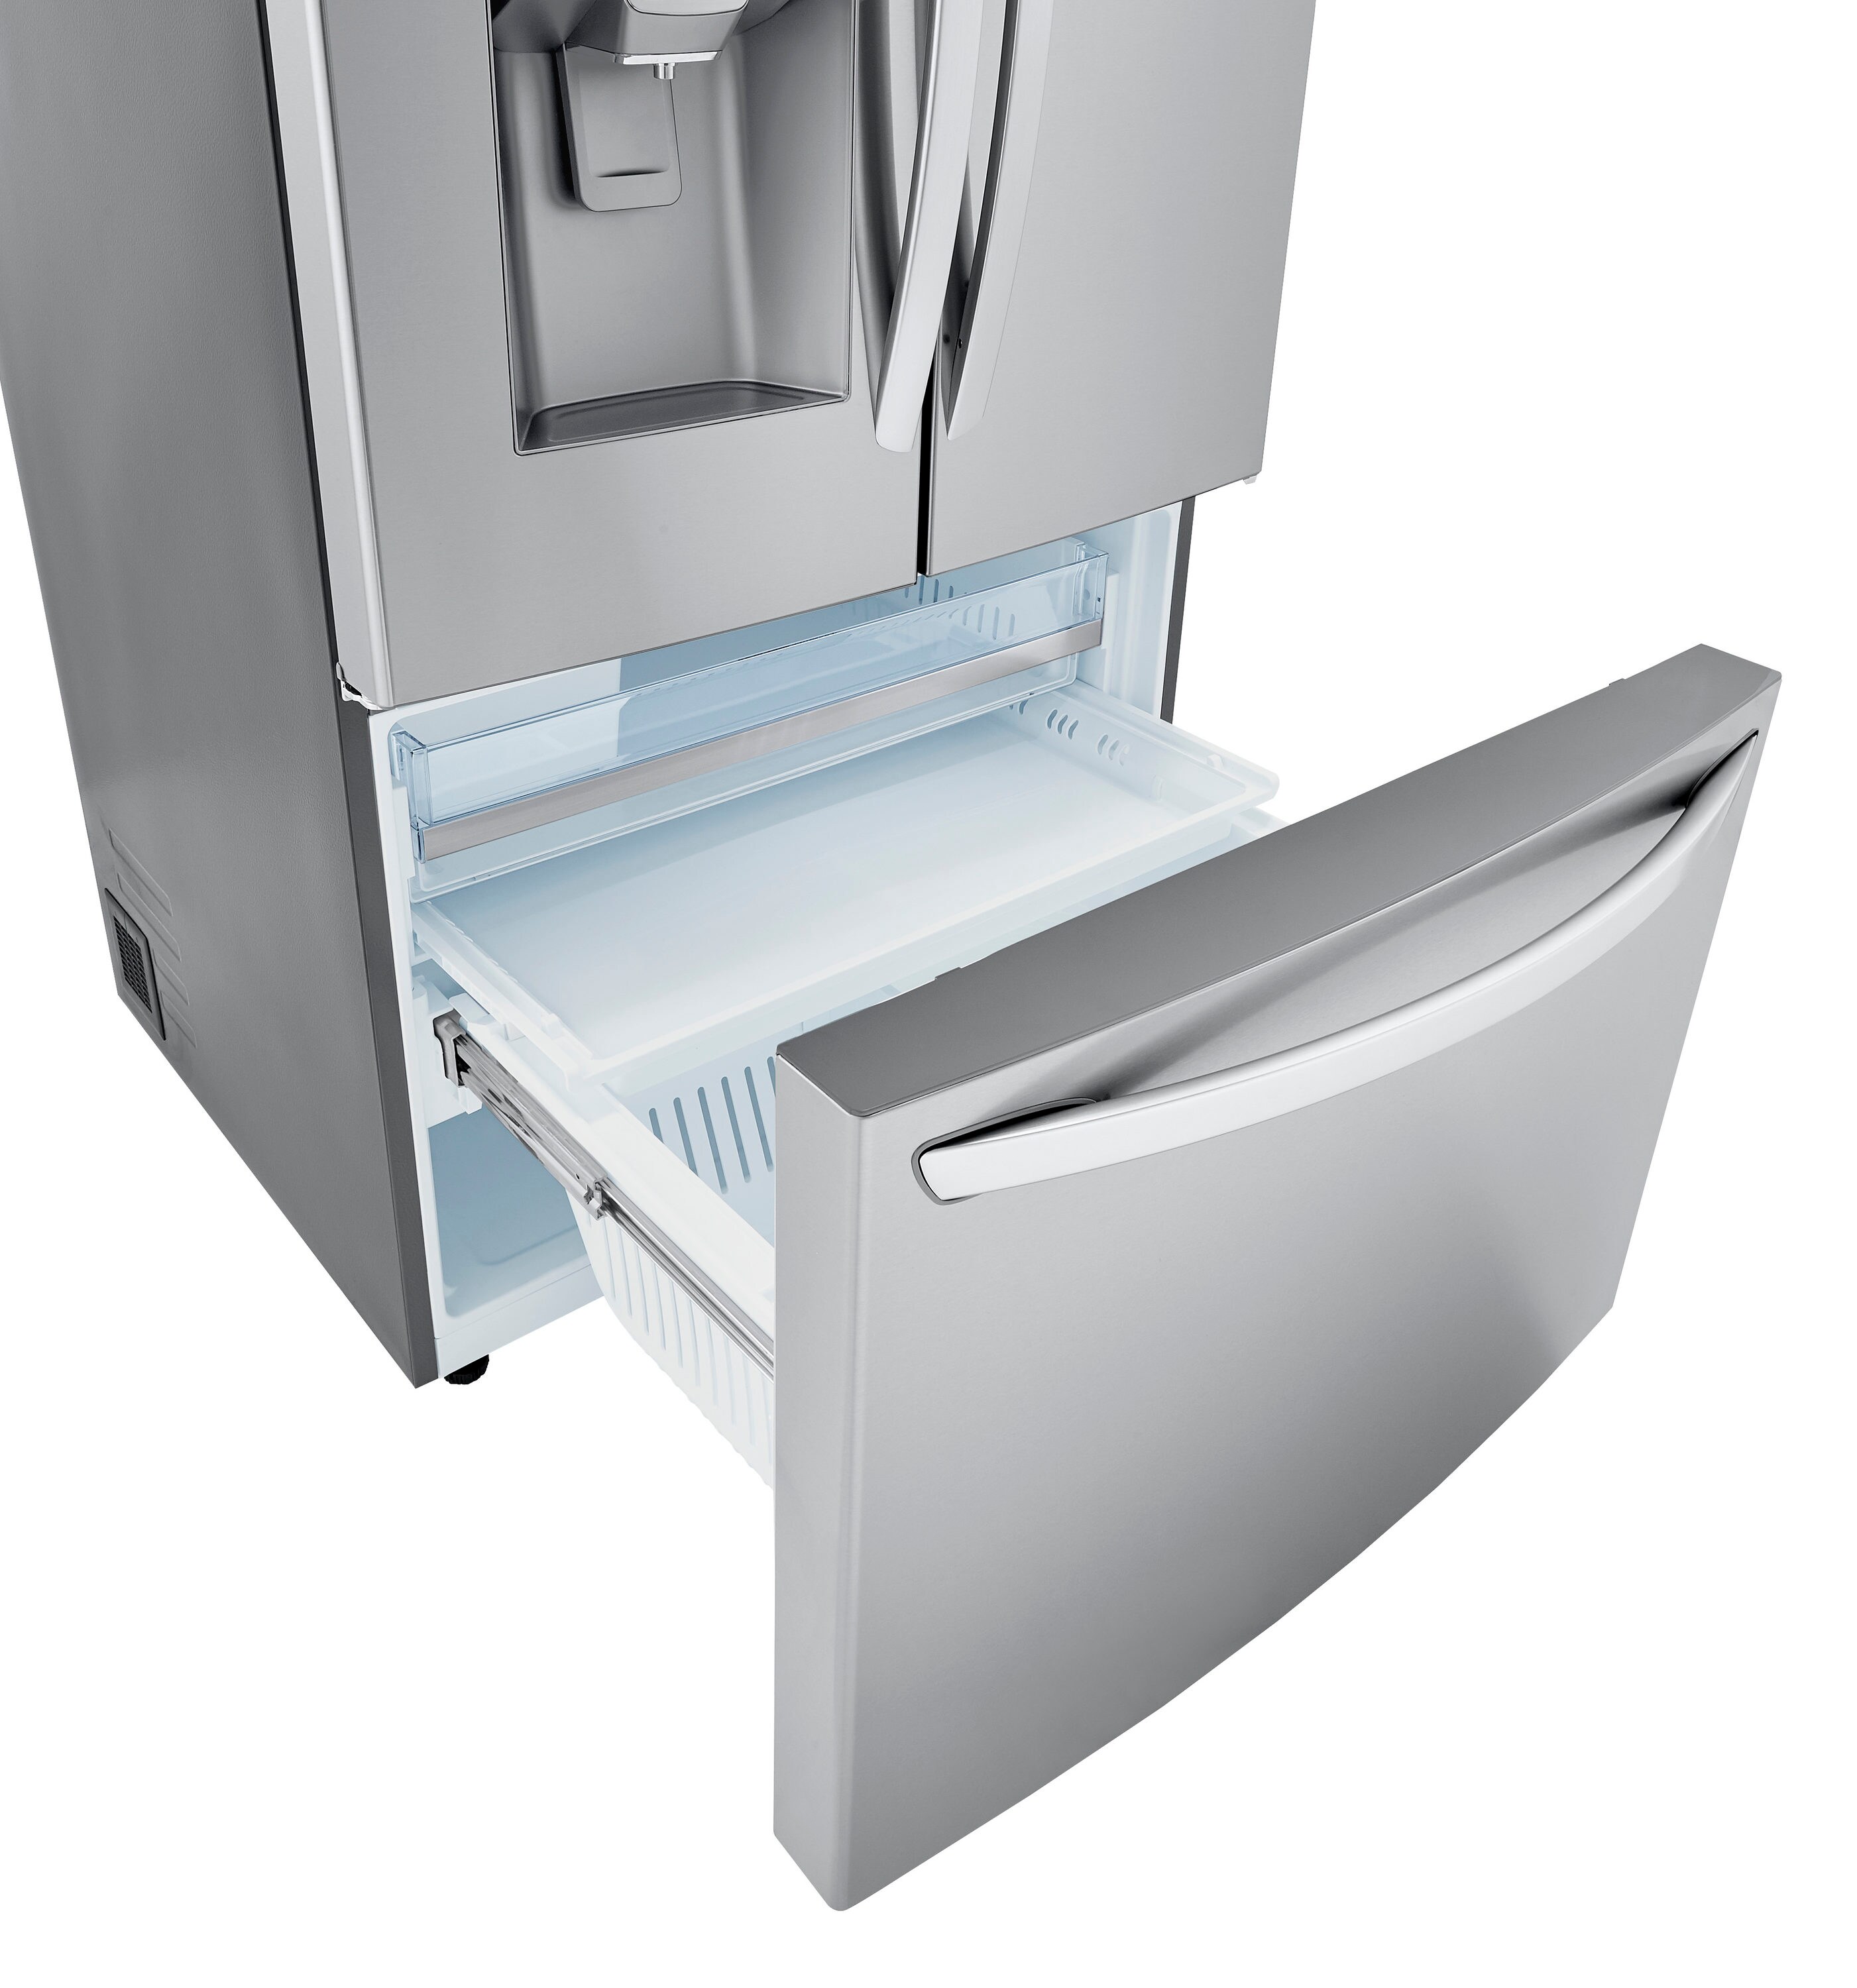 24 cu. ft. Counter-Depth Refrigerator with Craft Ice™ Maker, LRFXC2416S